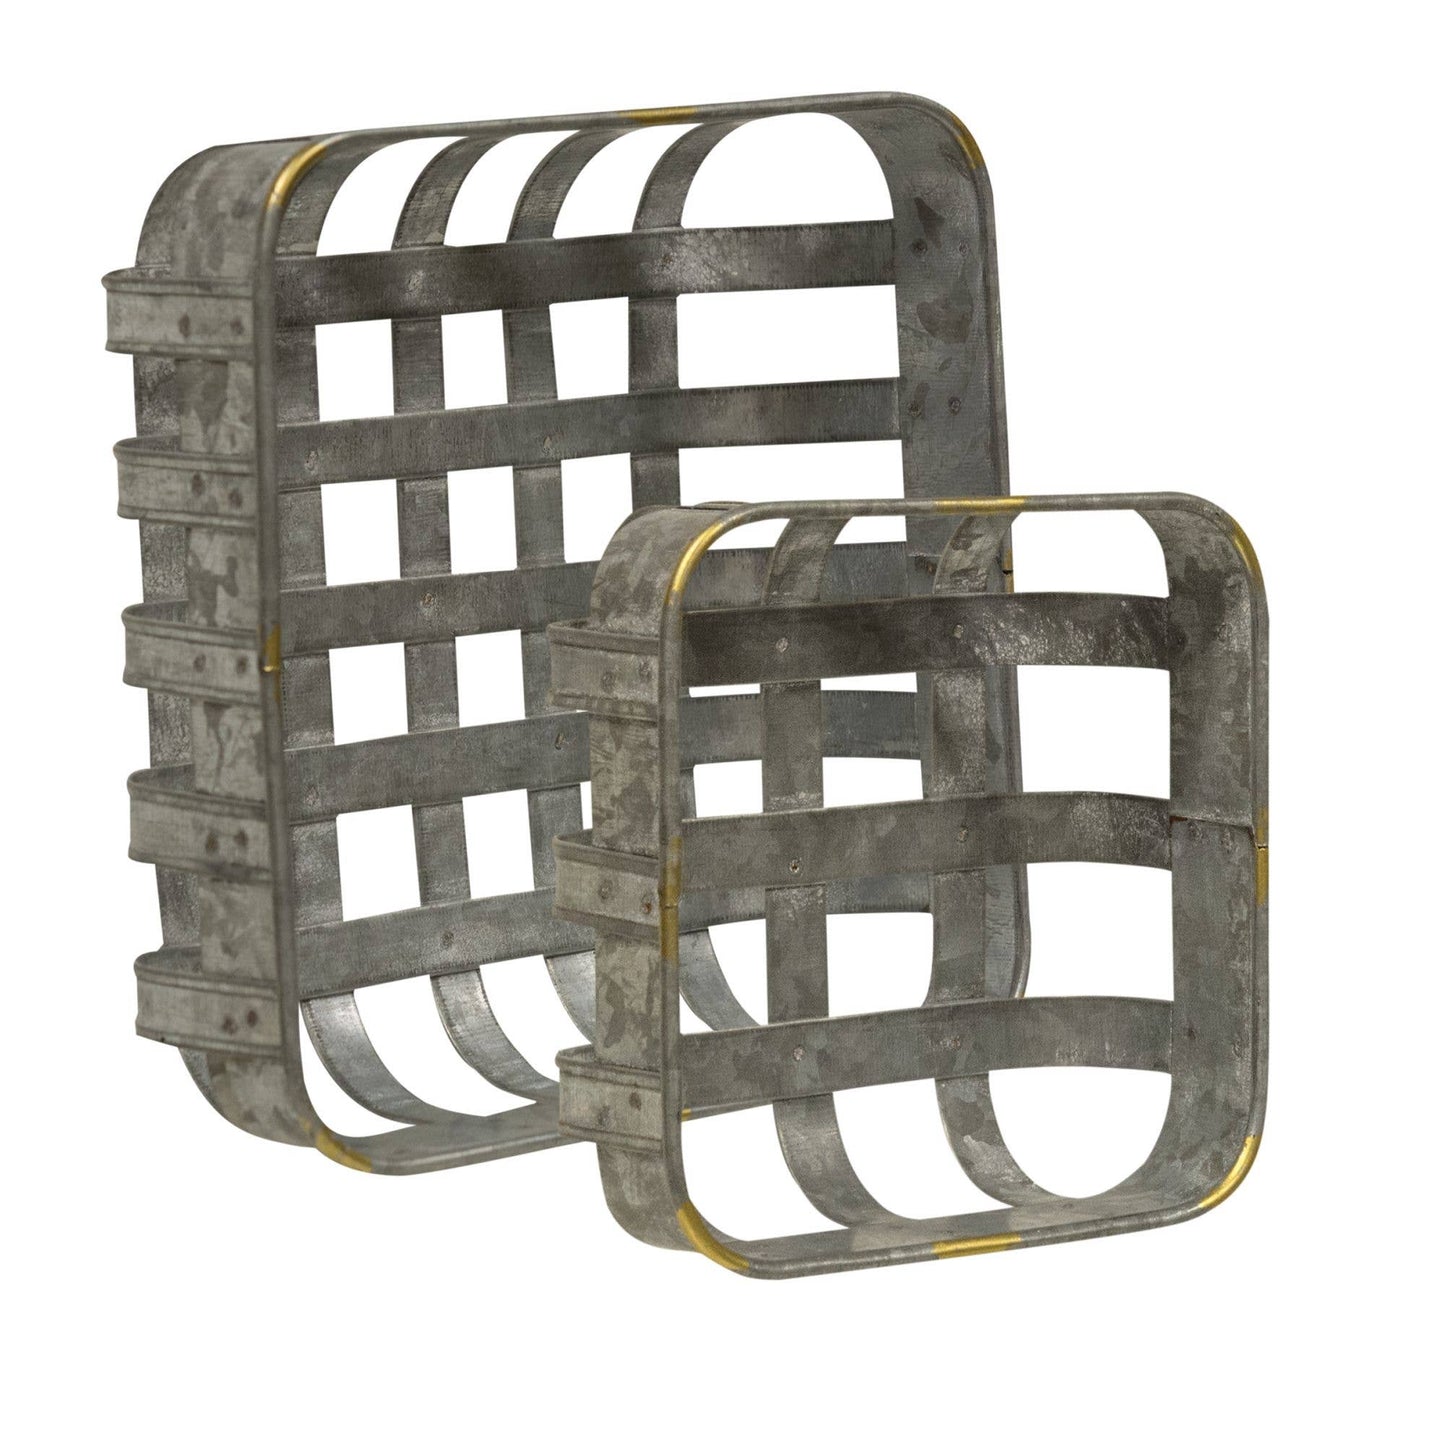 Washed Galvanized Metal Baskets - Set of 2